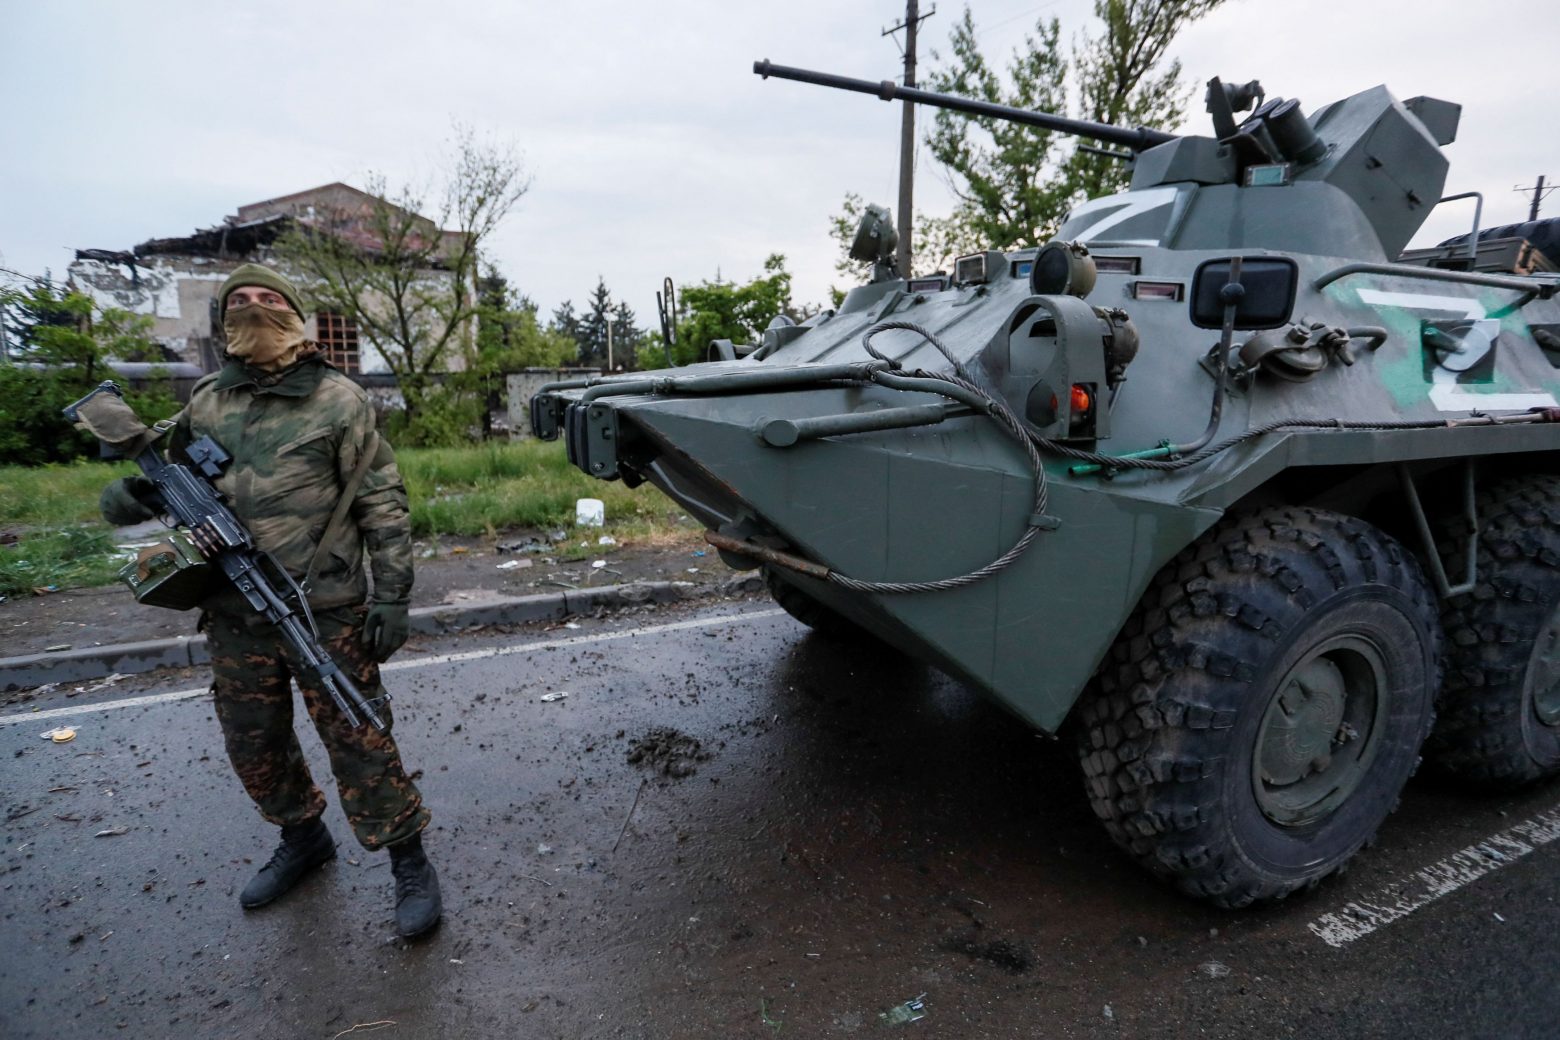 Atlantic: Σε πιο επικίνδυνη φάση ο πόλεμος στην Ουκρανία - Θα «σπάσει» η ενότητα της Δύσης;